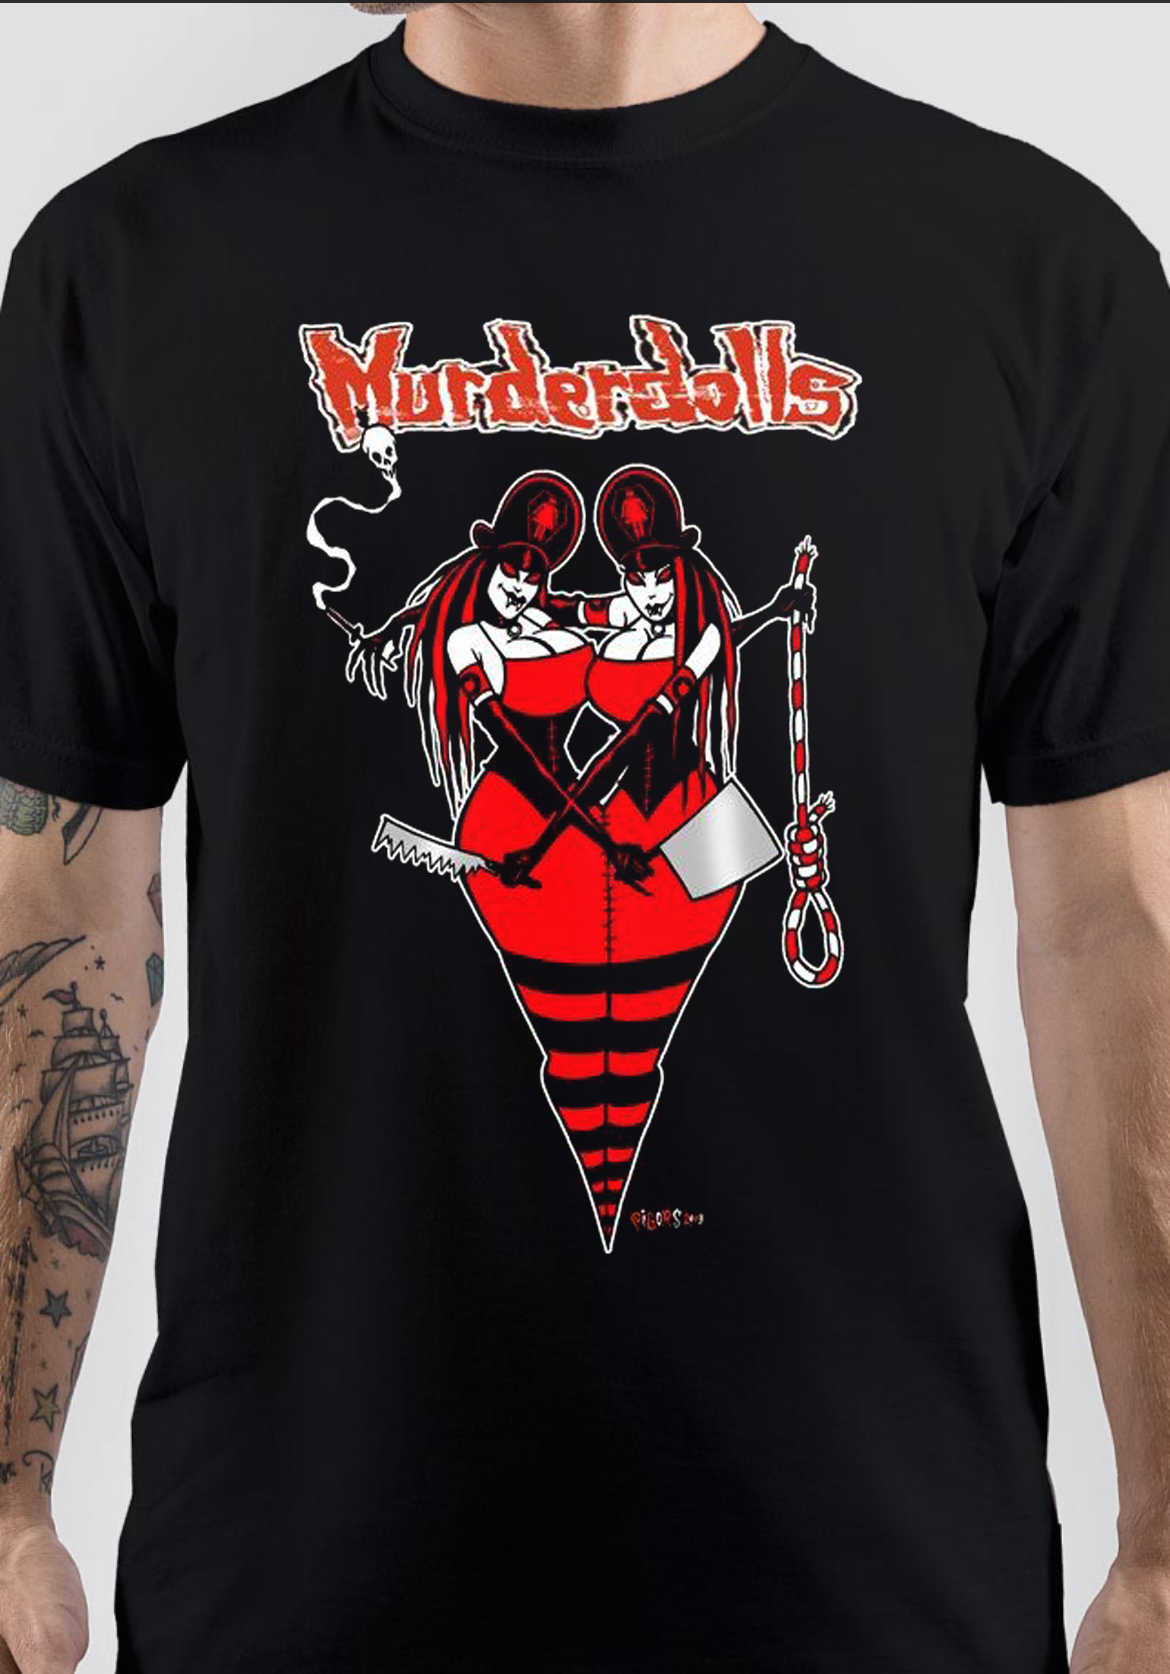 Murderdolls T-Shirt - Swag Shirts